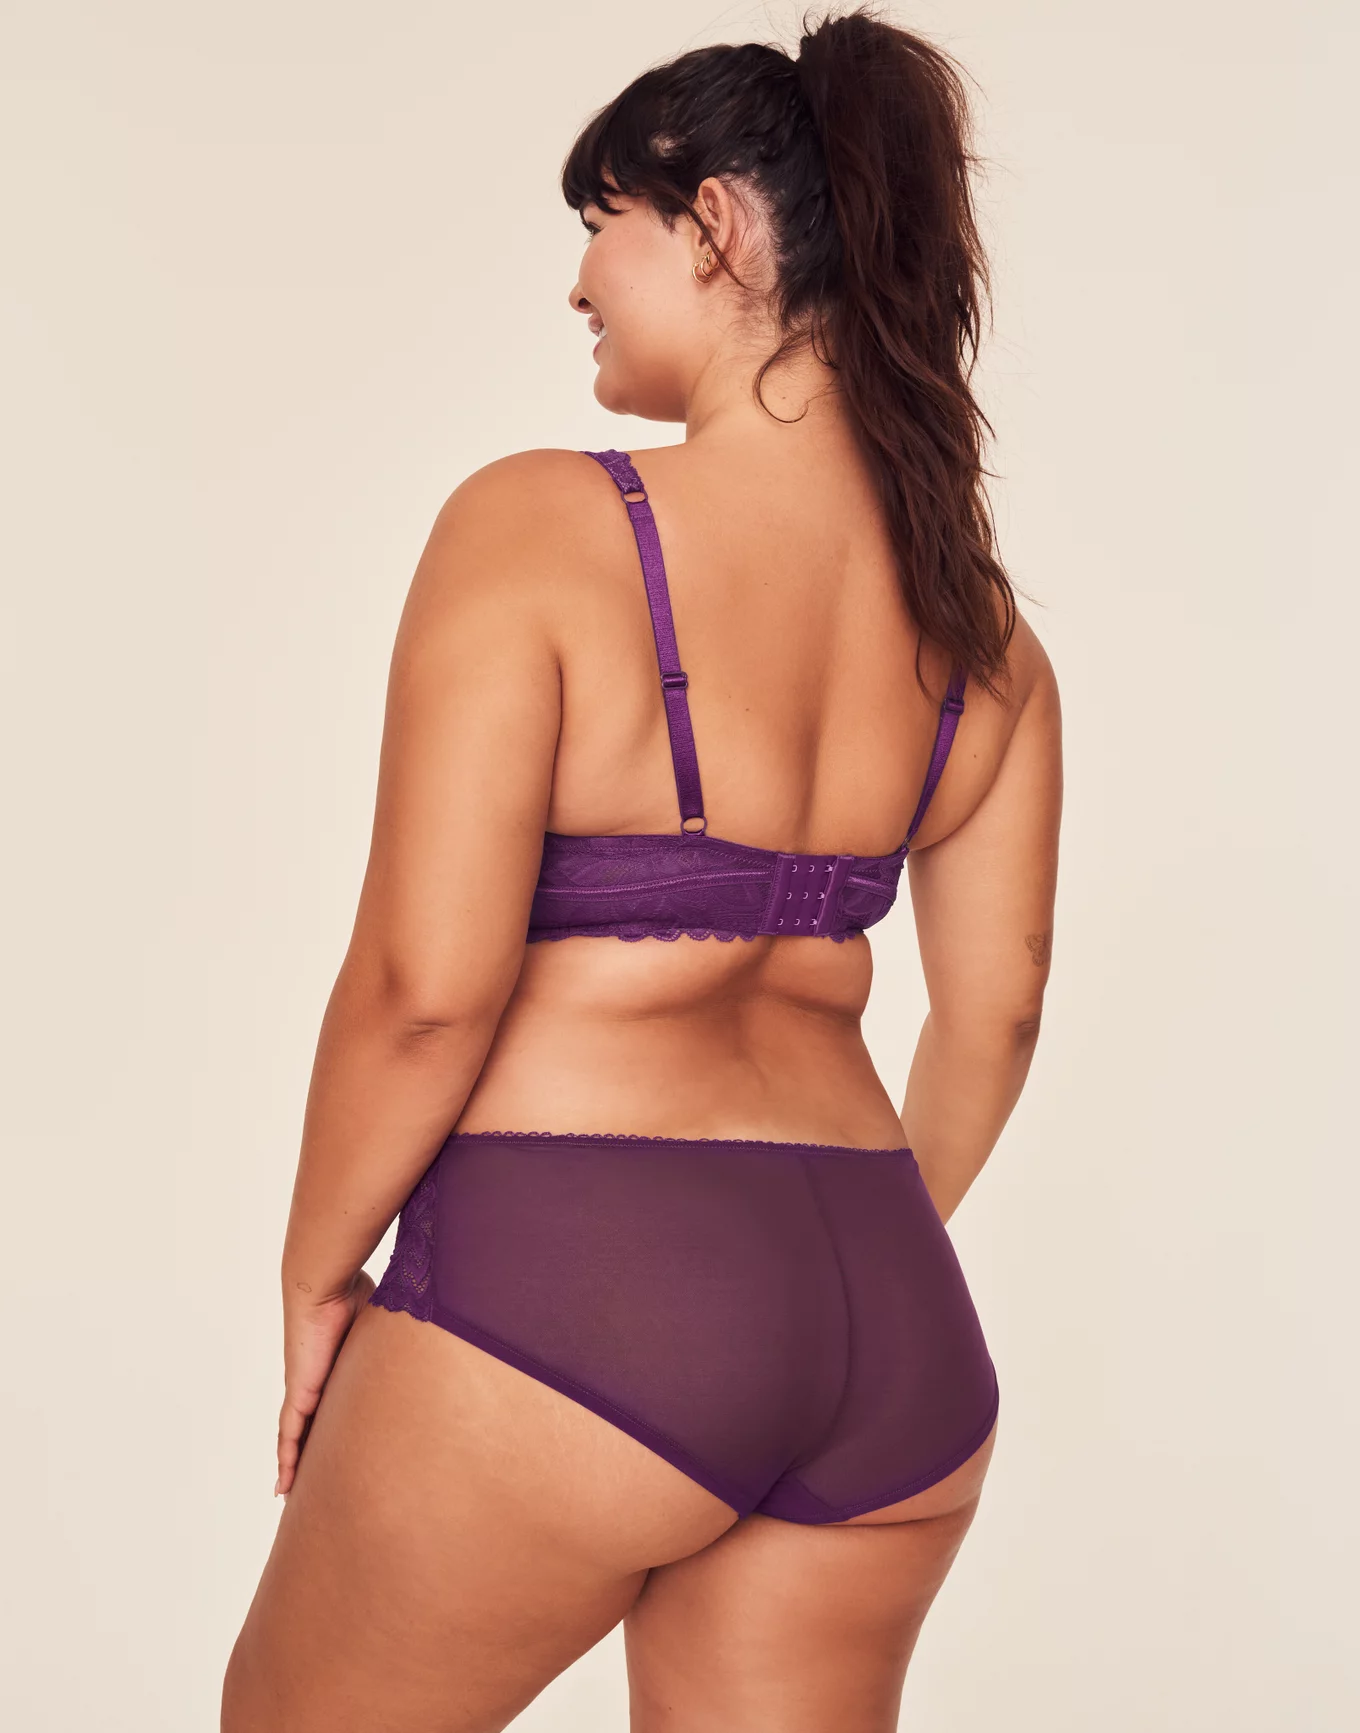 Plus Size Lace Bralette Purple Bra & Panties